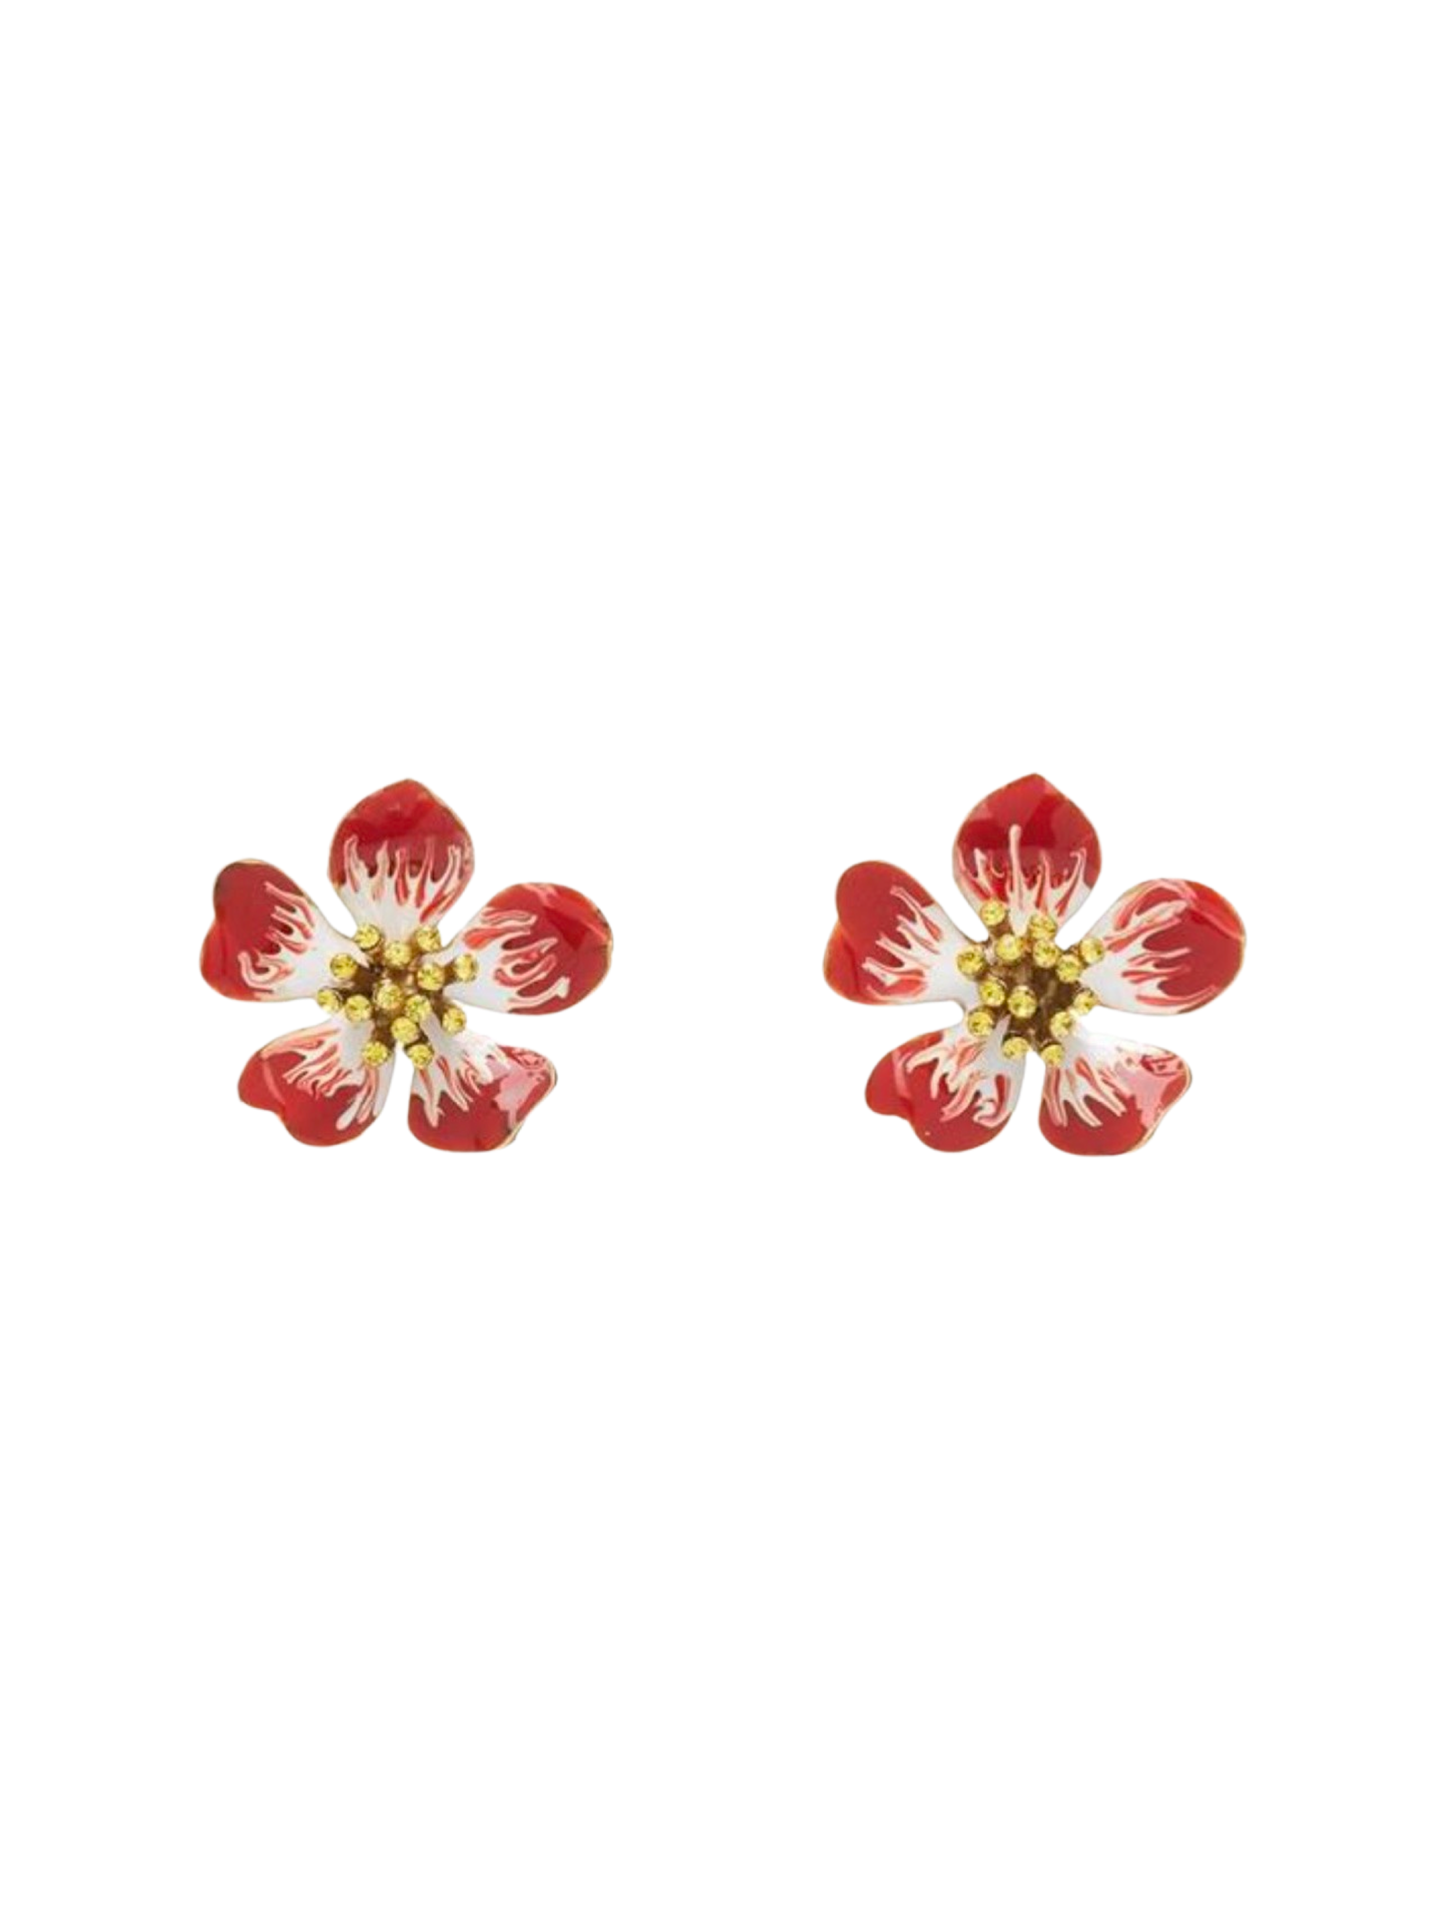 Oscar de la Renta Small Hand Painted Flower Earrings (More Colors)